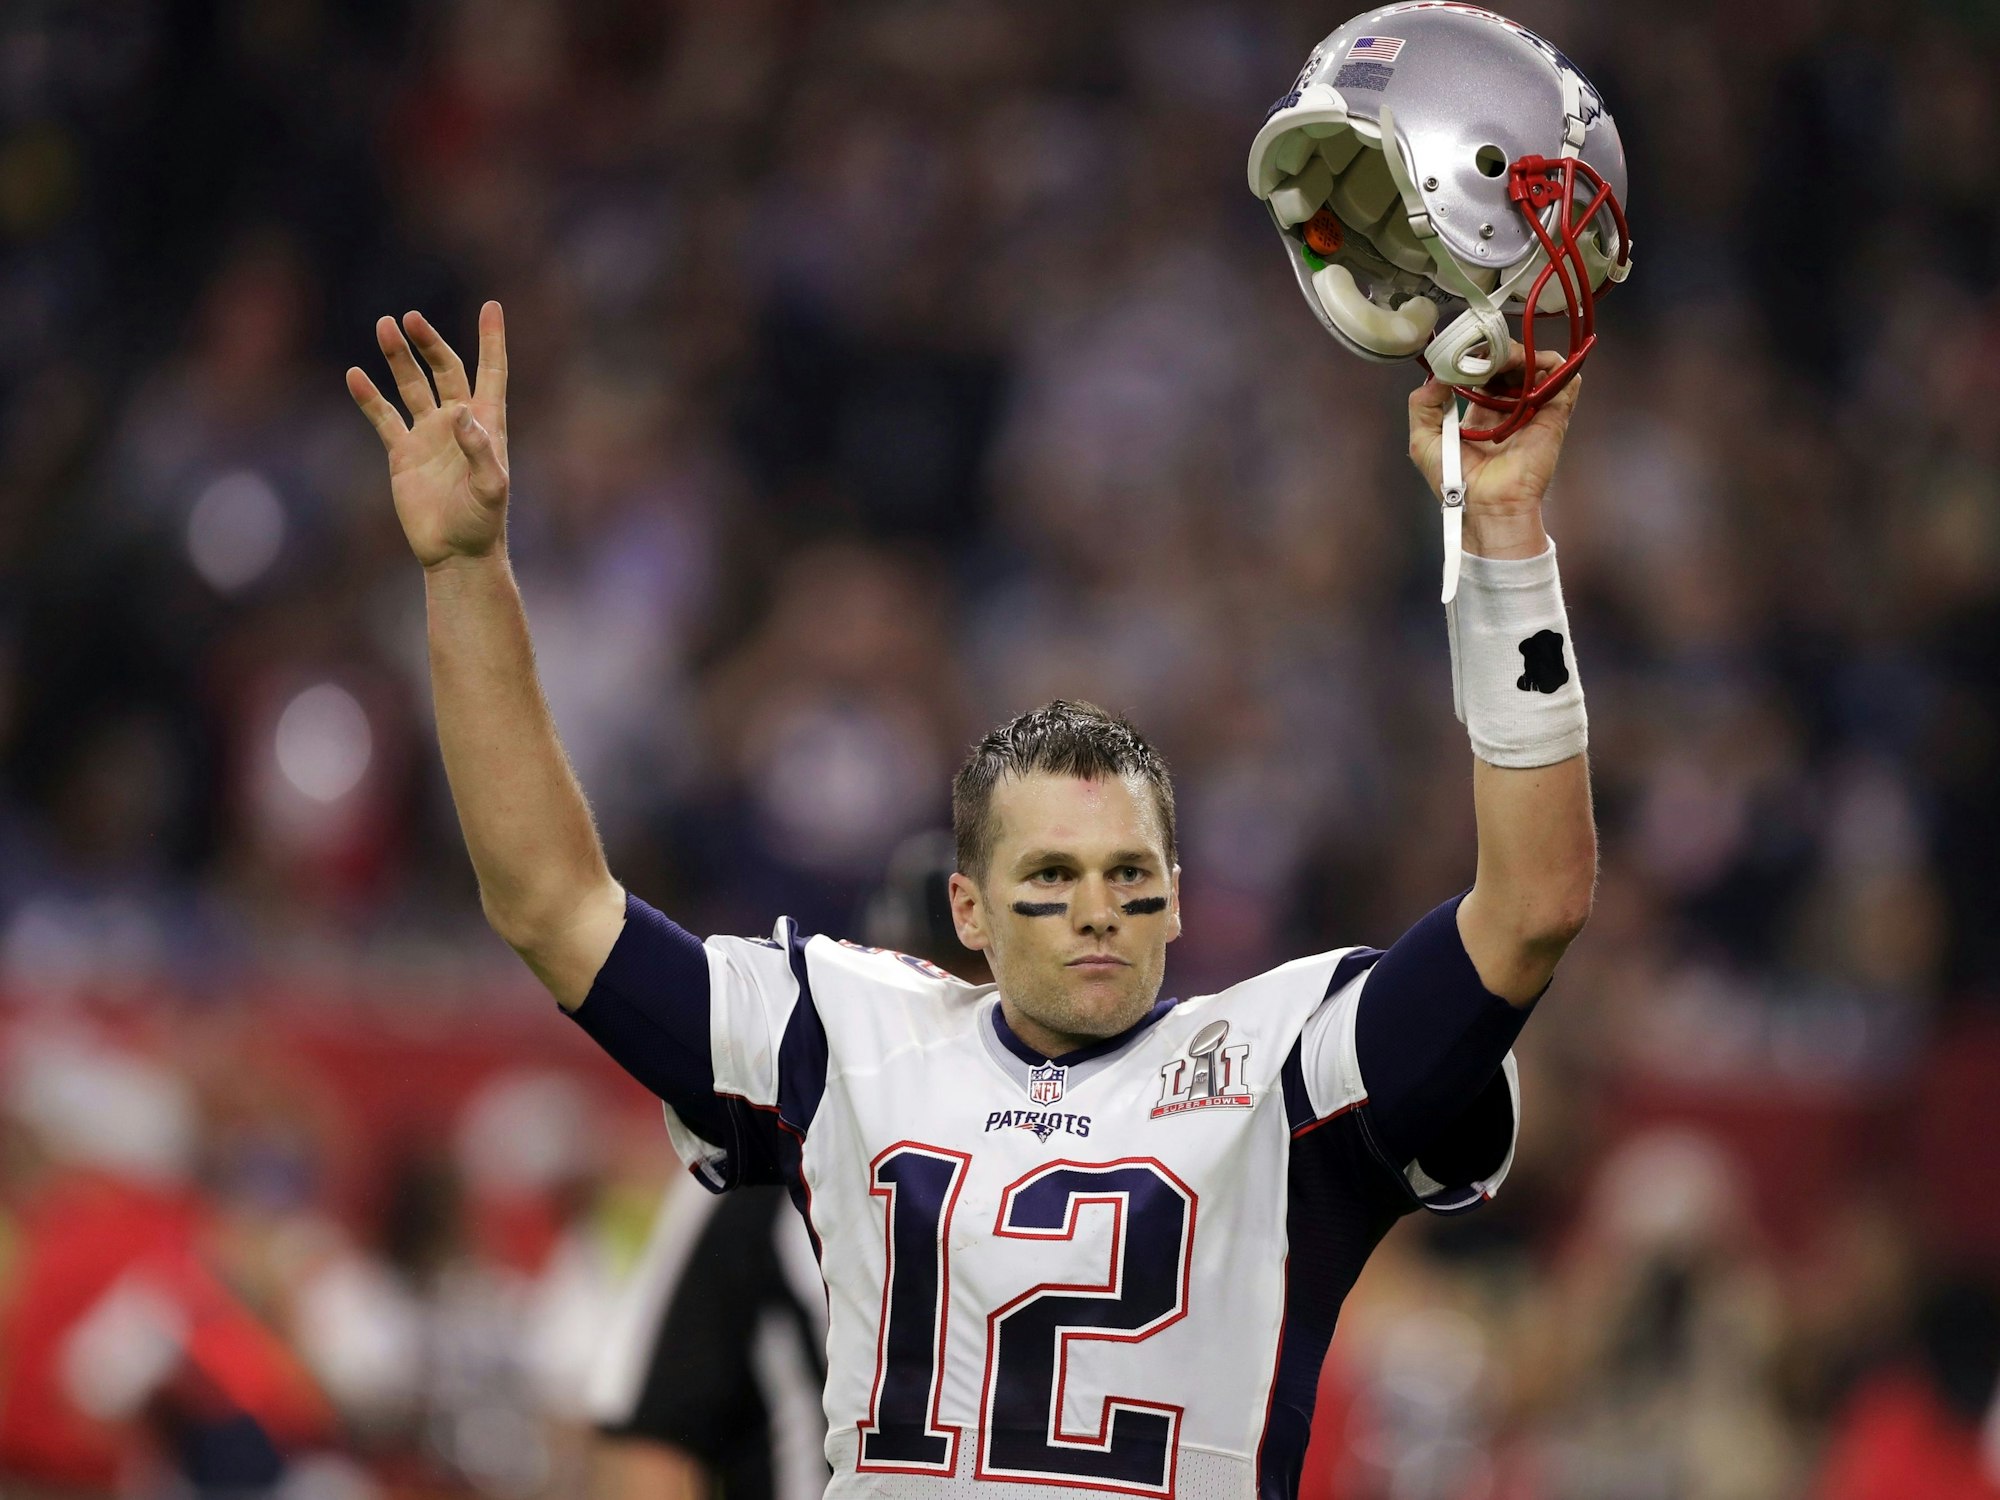 51. Super Bowl am 05.02.2017 im NRGStadium in Houston, Texas, USA: Tom Brady jubelt nach einem Touchdown am 5. Februar 2017.